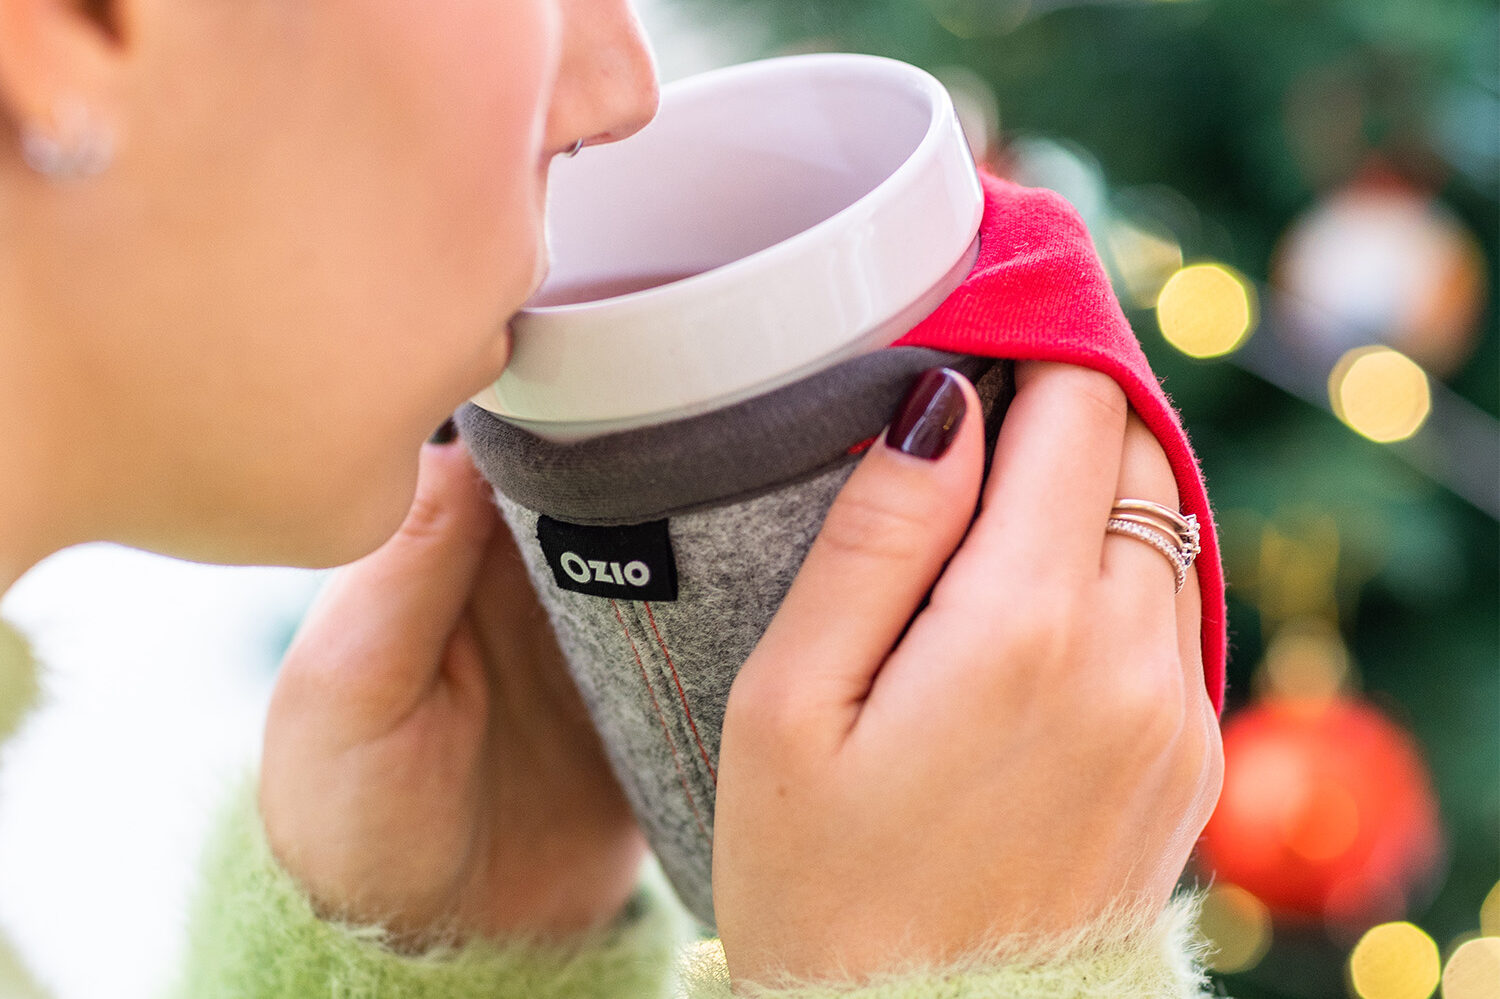 Hand-warming coffee tea mug